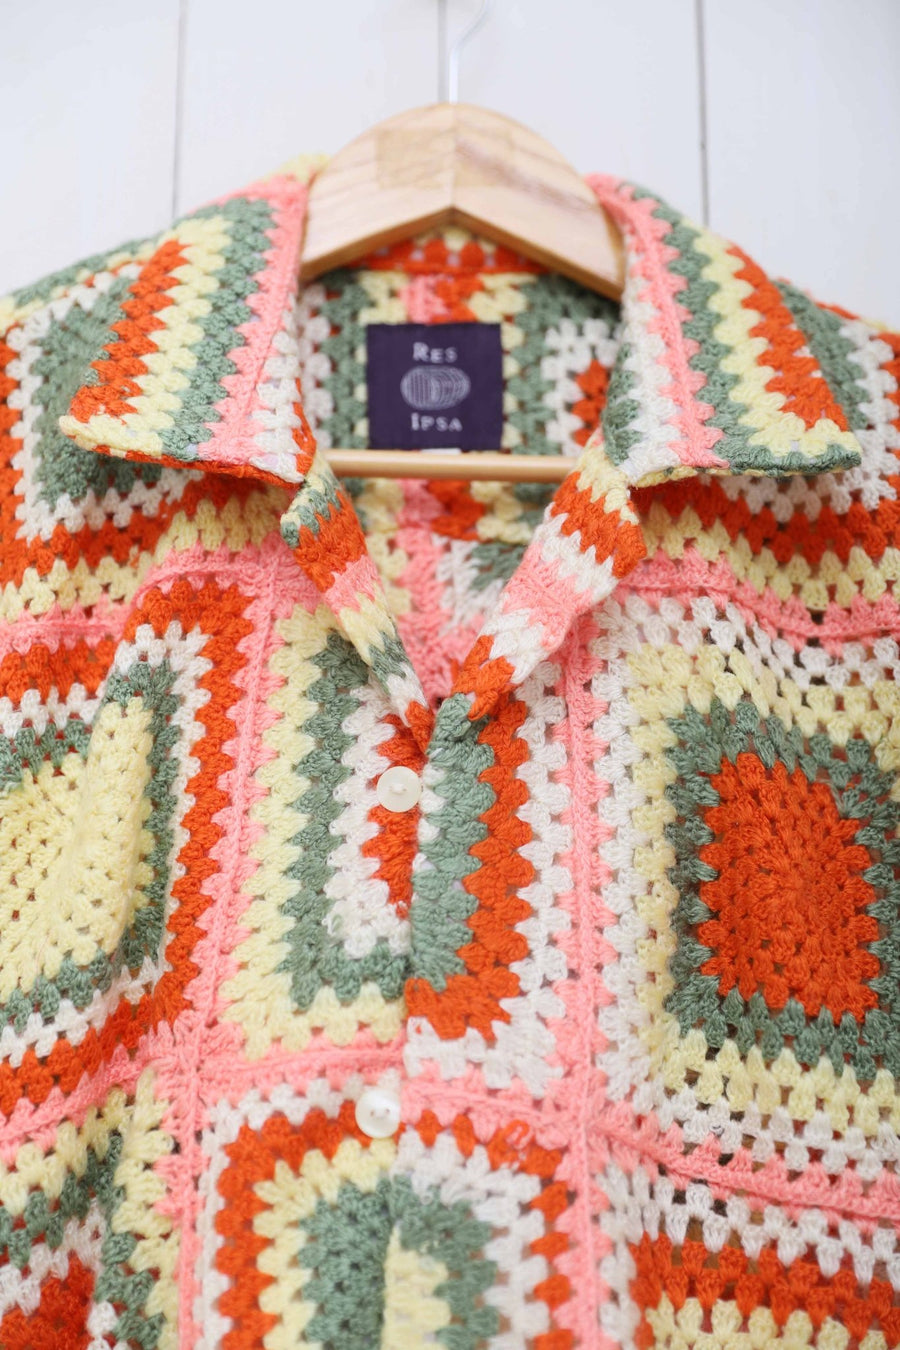 Crochet Camp Shirt #7 - RES IPSA